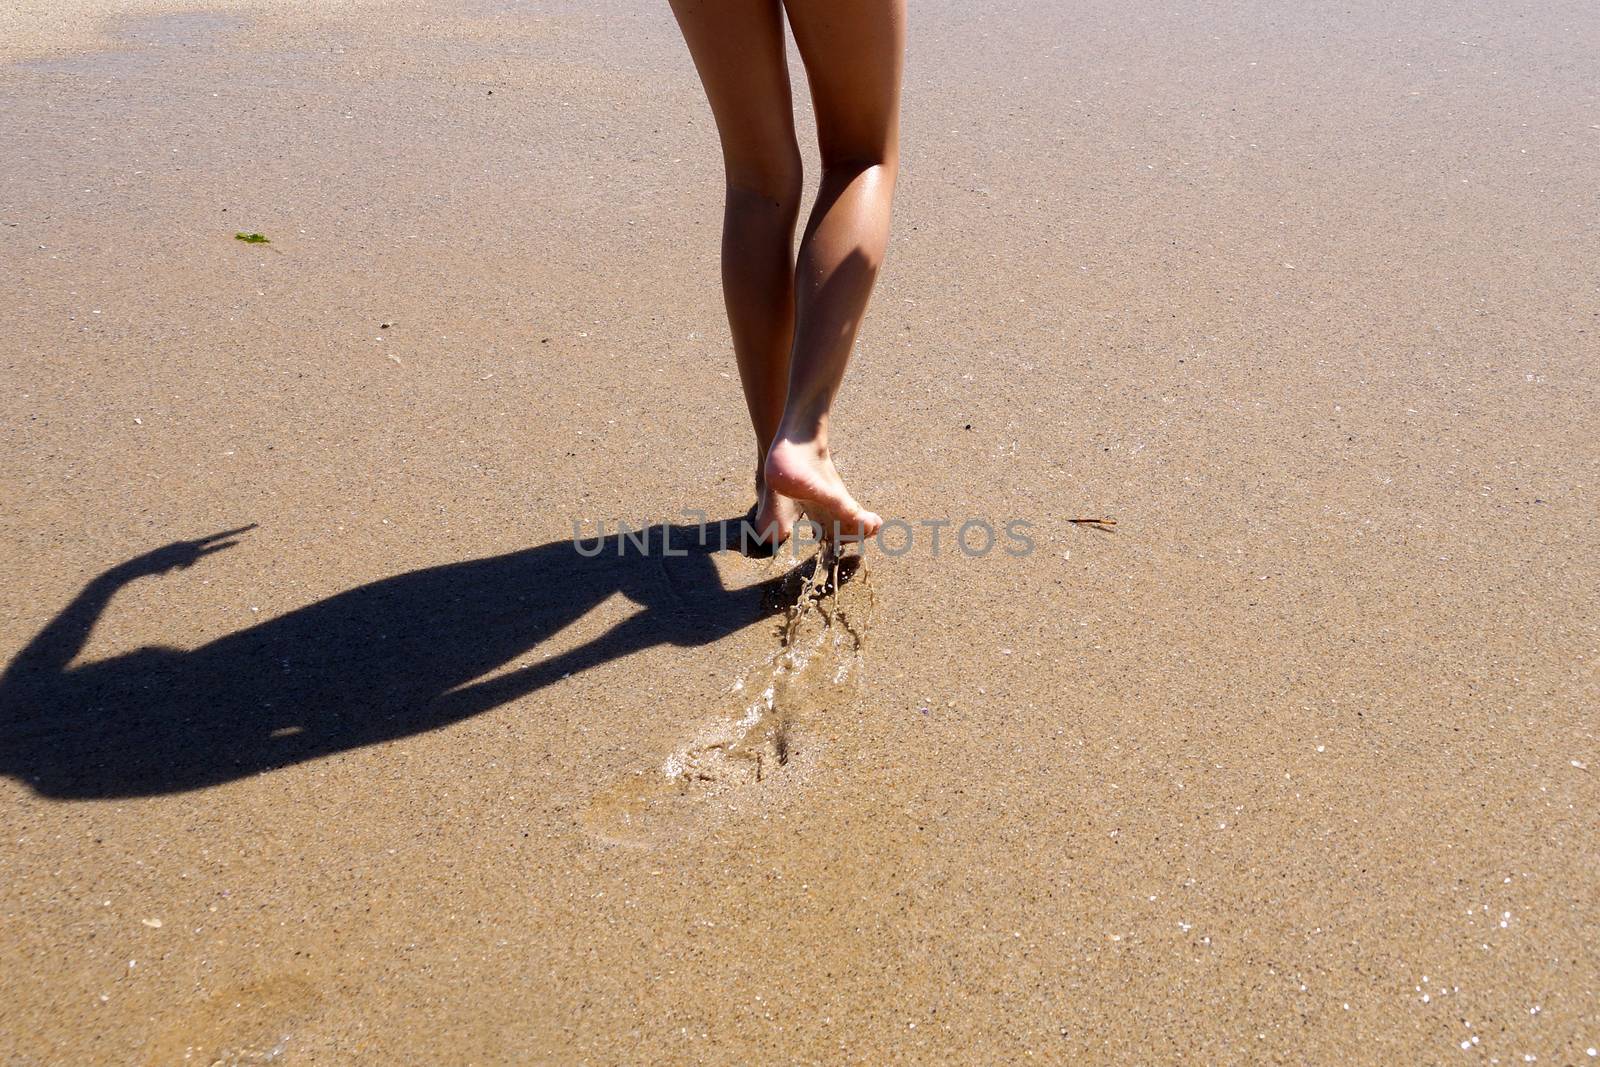 child feet walk on wet sea sand, back view by Annado